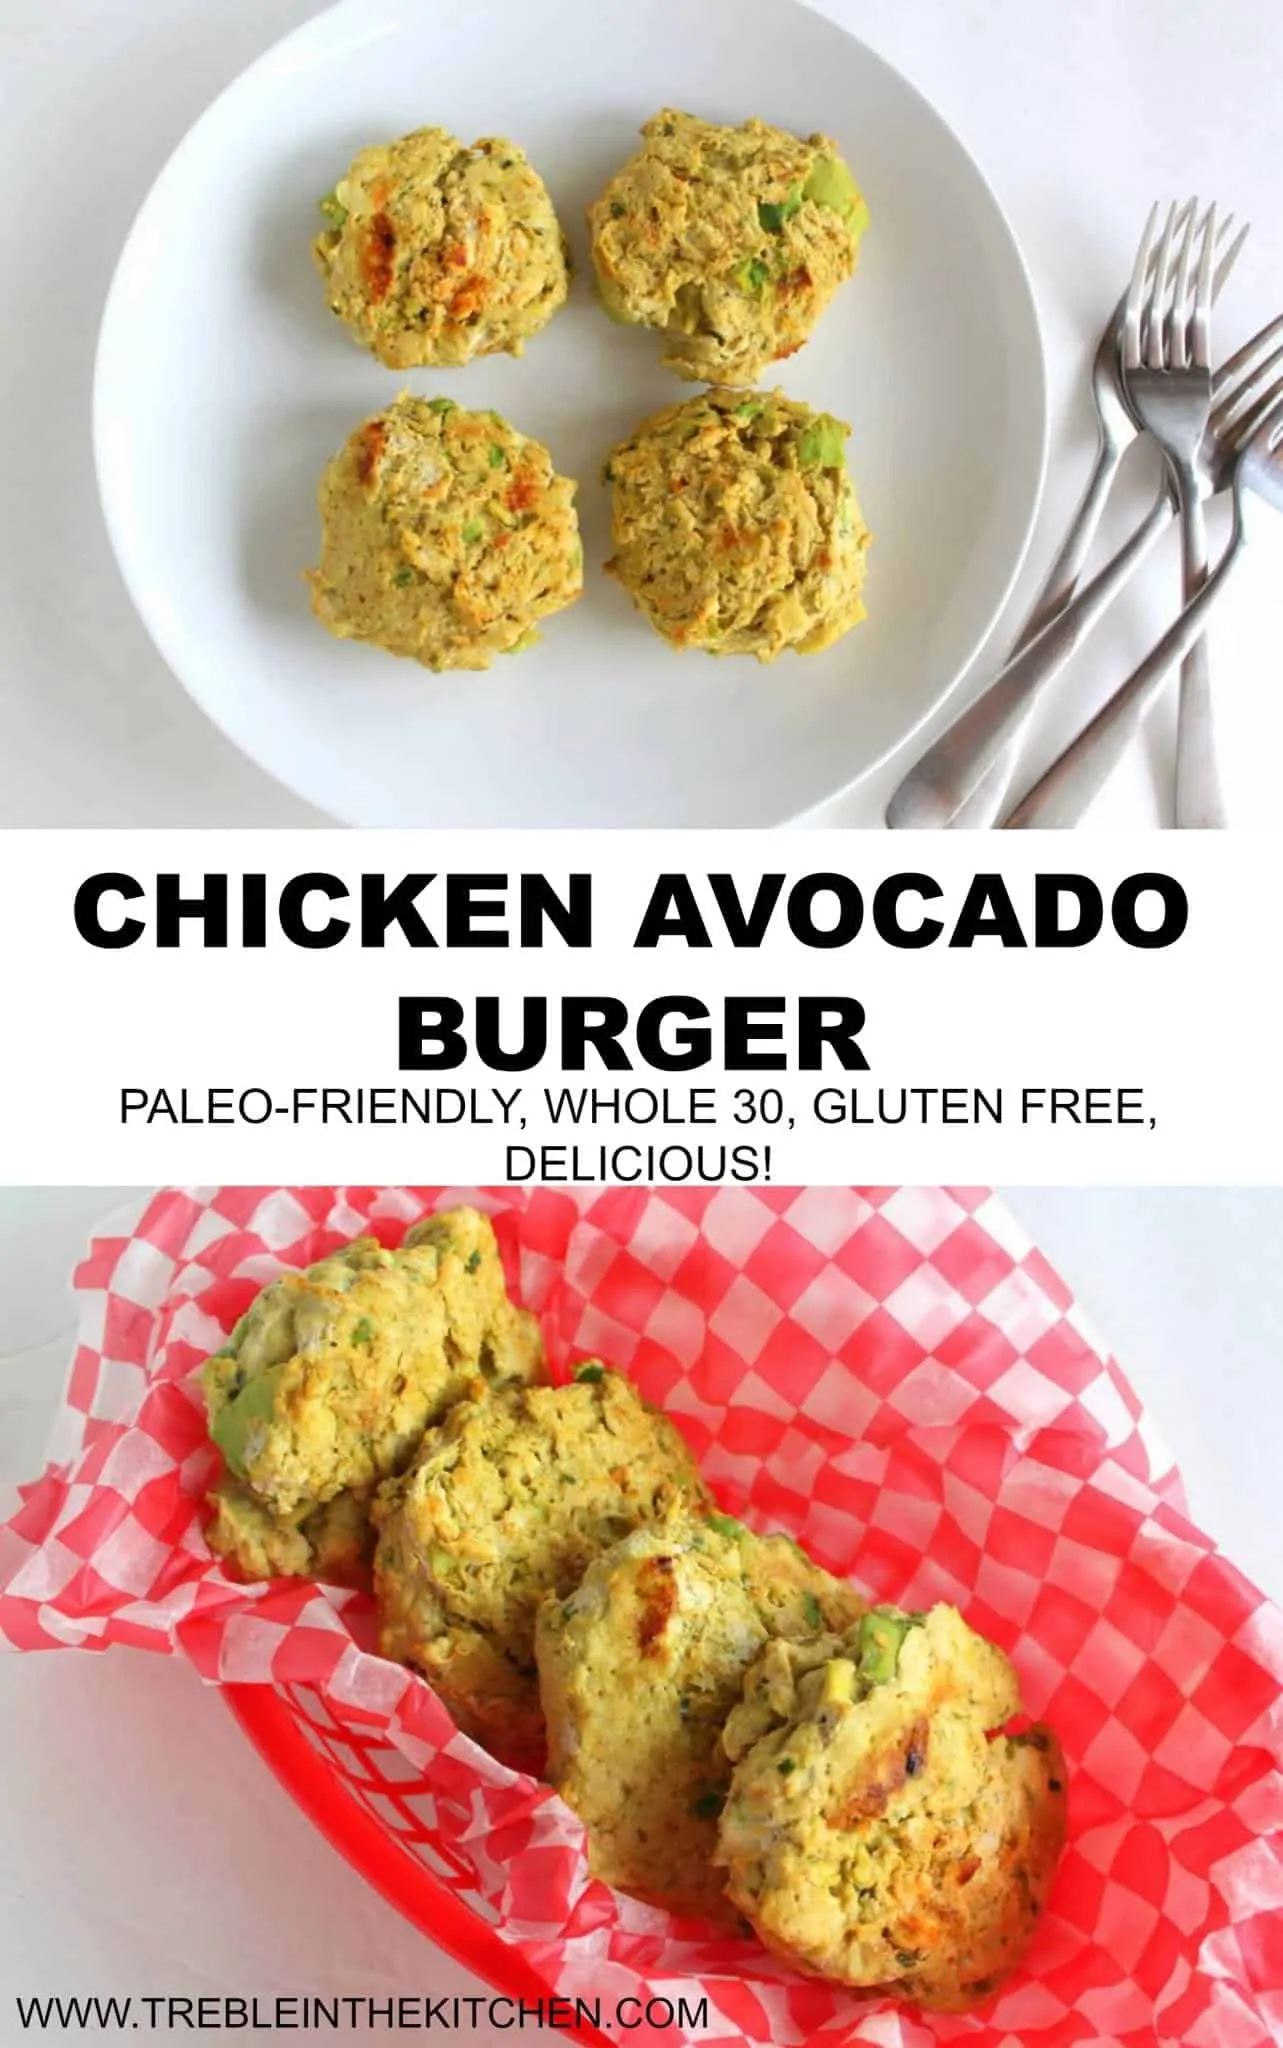 Chicken Avocado Burgers | Treble in the Kitchen